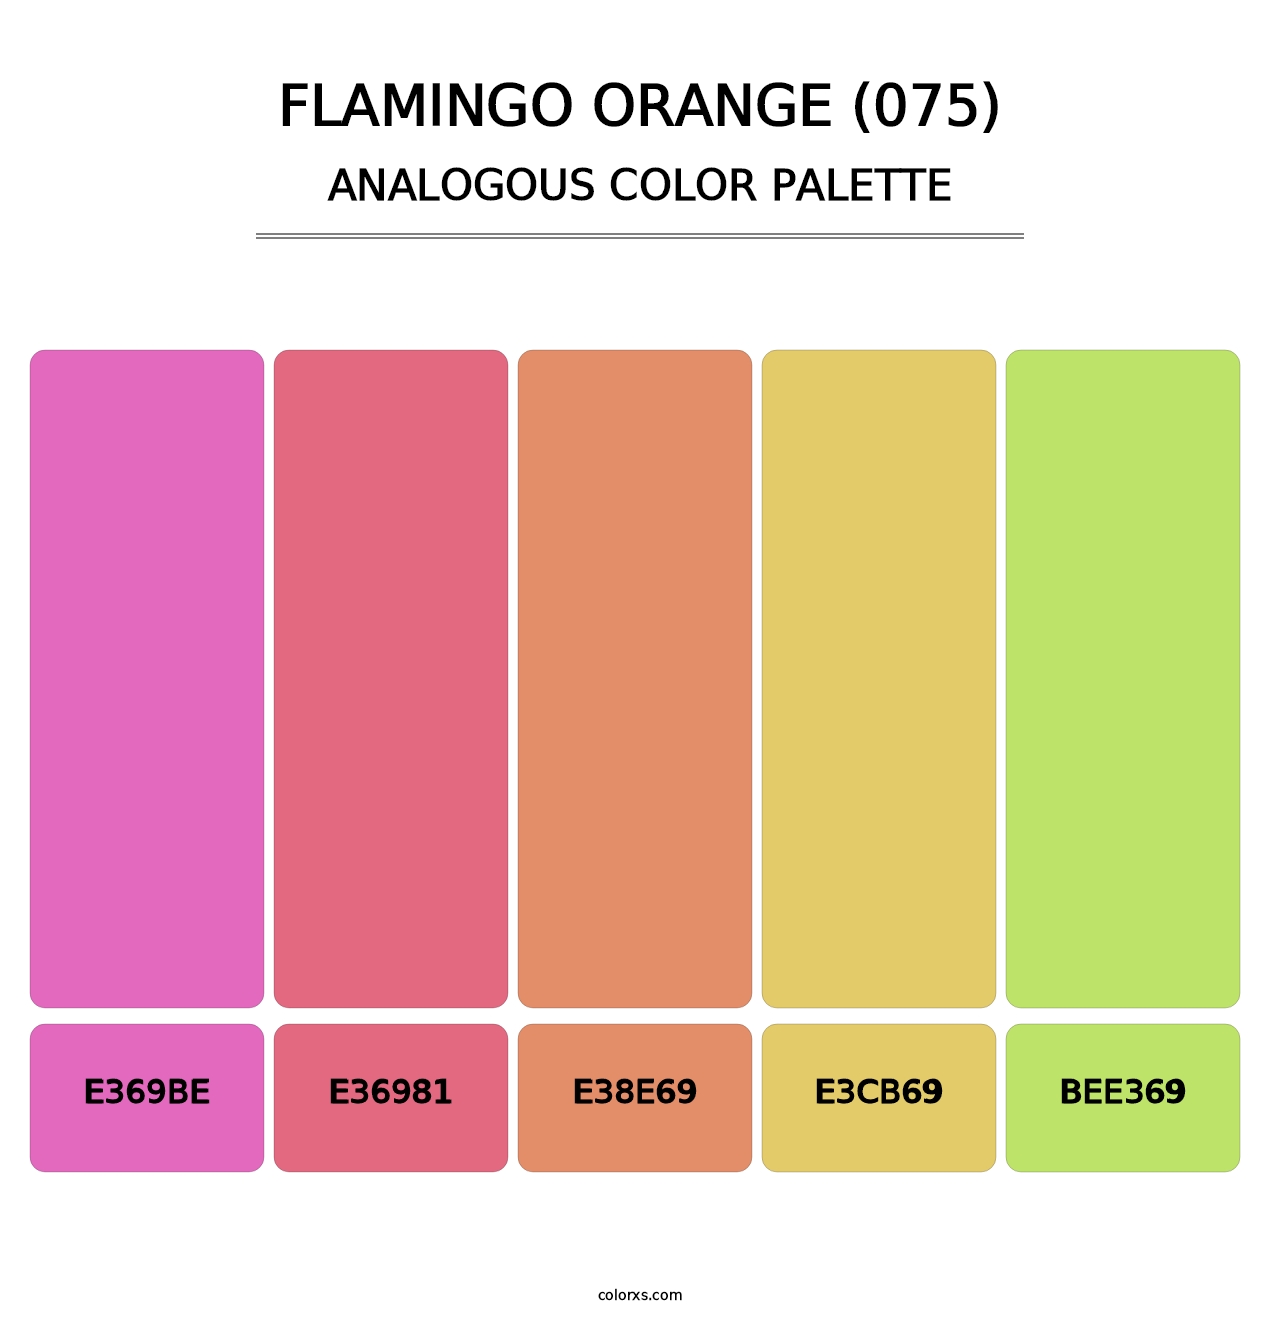 Flamingo Orange (075) - Analogous Color Palette